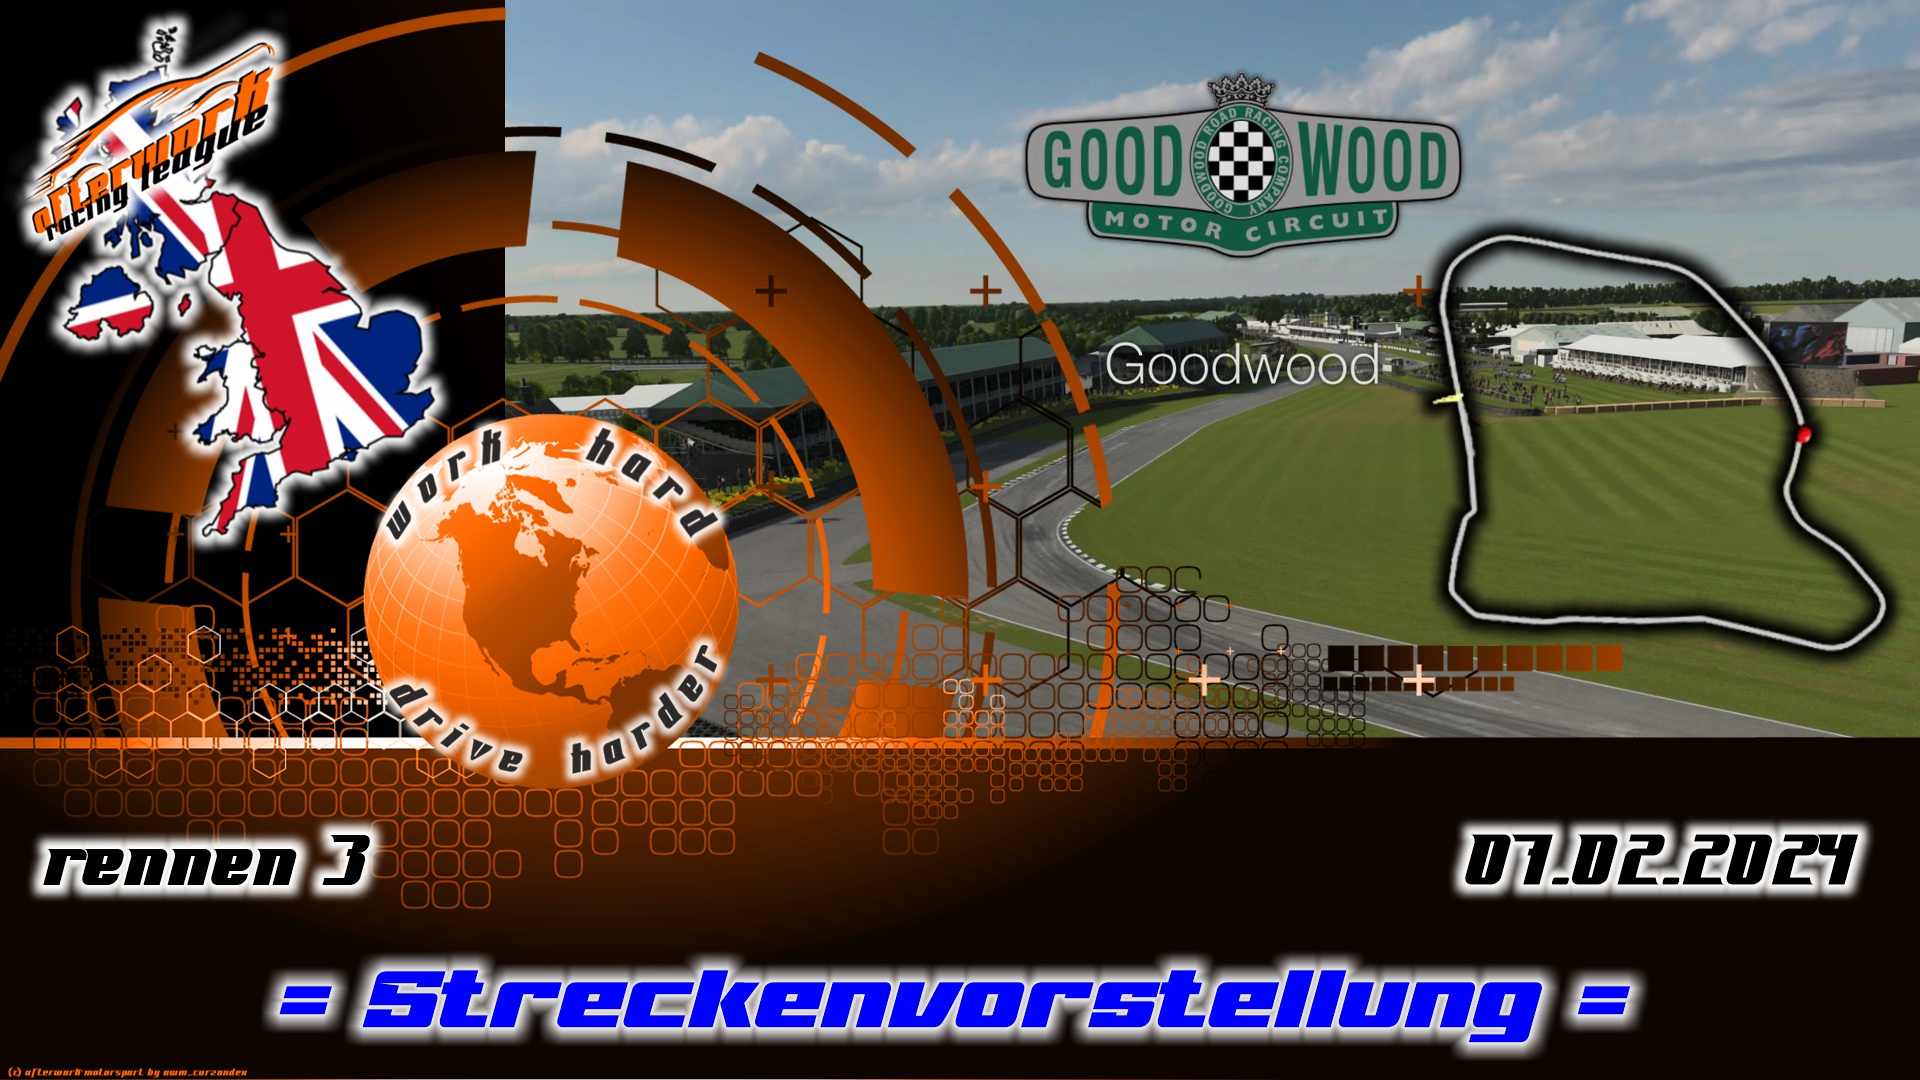 🇬🇧 S21: Rennen 3: Goodwood Motor Circuit 🇬🇧